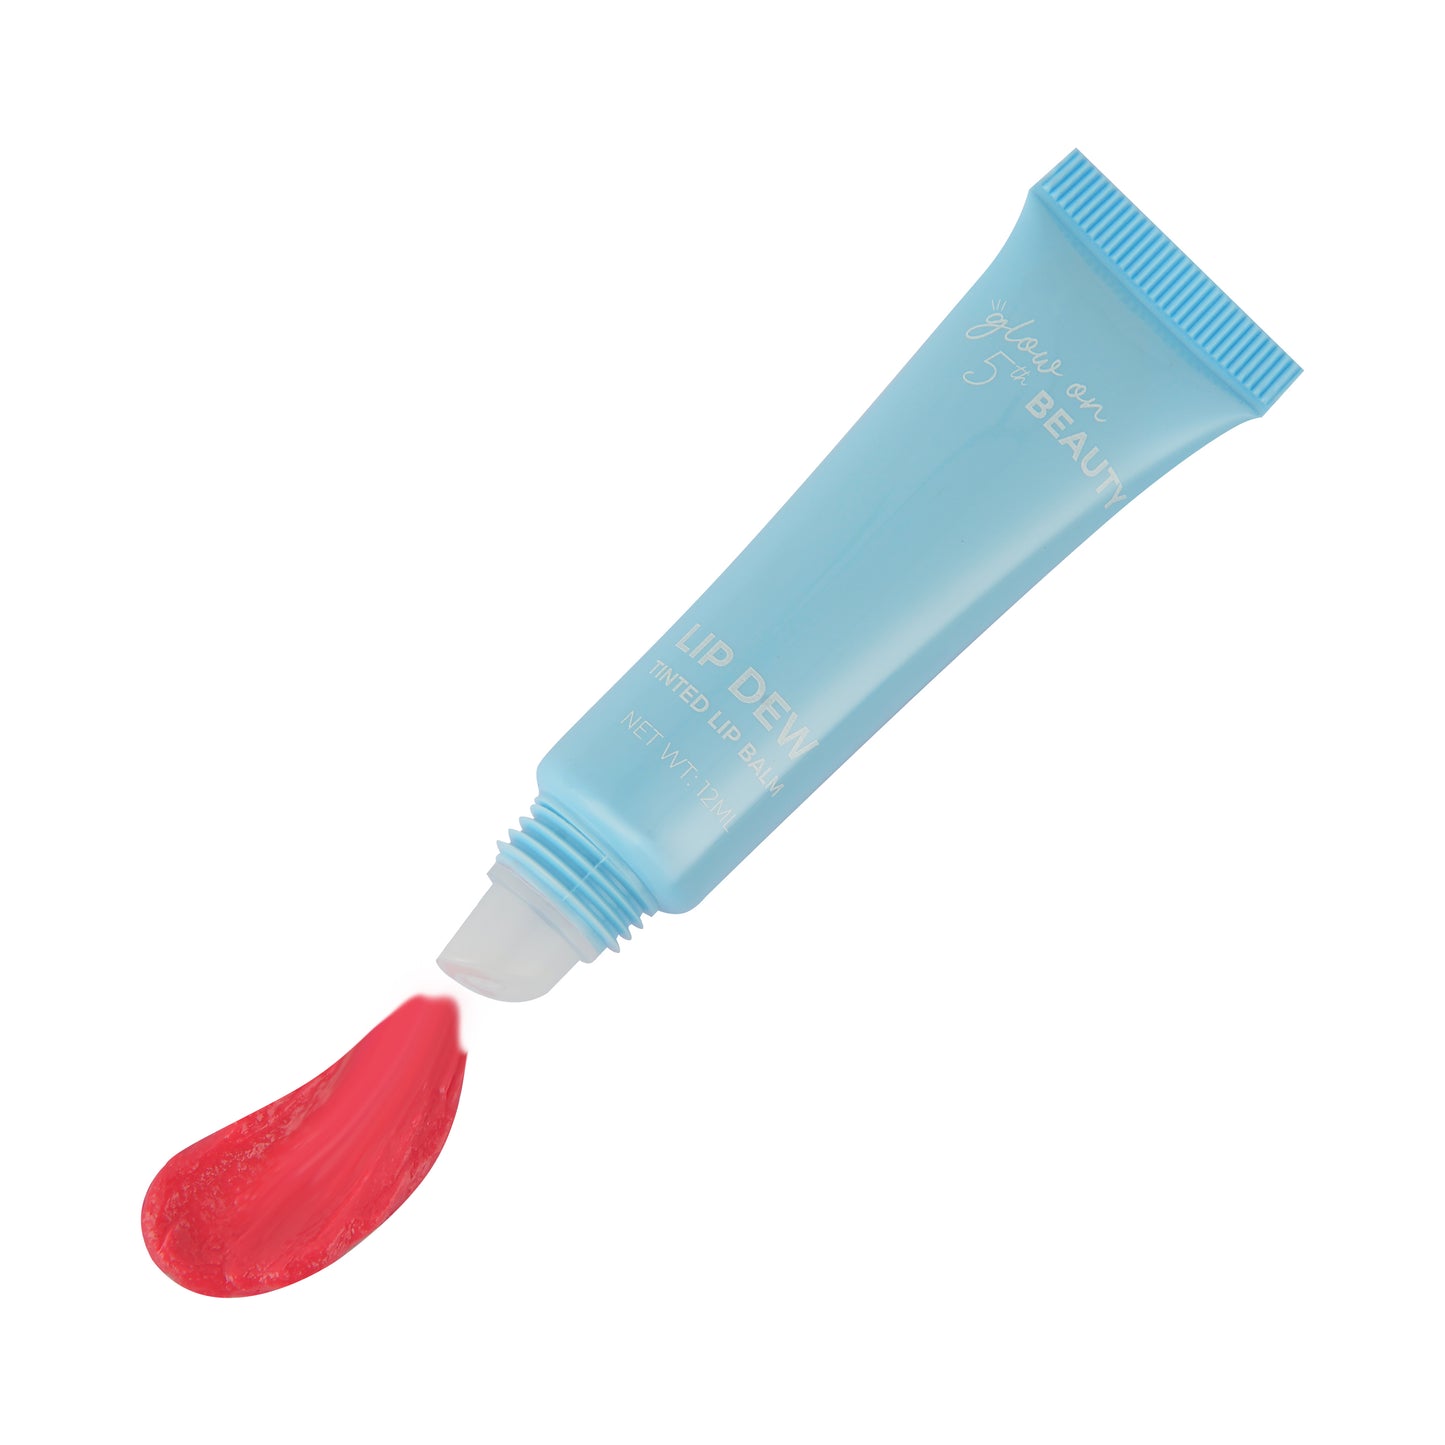 LIP DEW - Tinted Lip Balm - GRAPEFRUIT